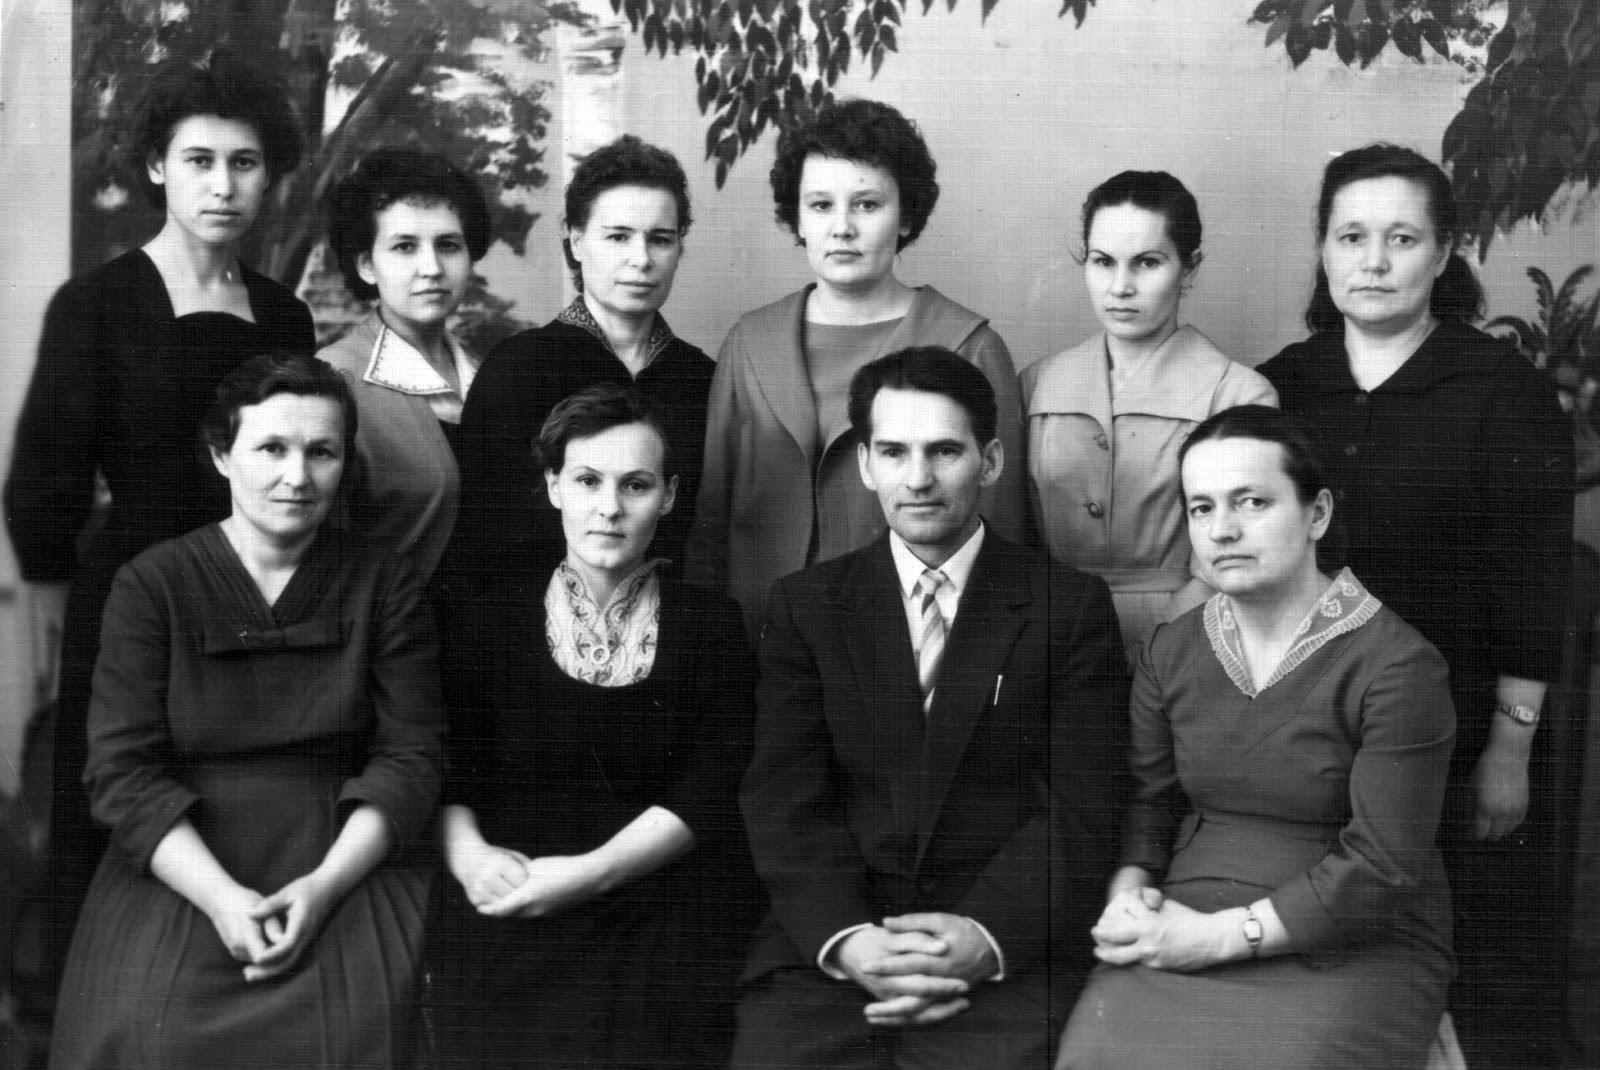 Сайт школы 1955 москва